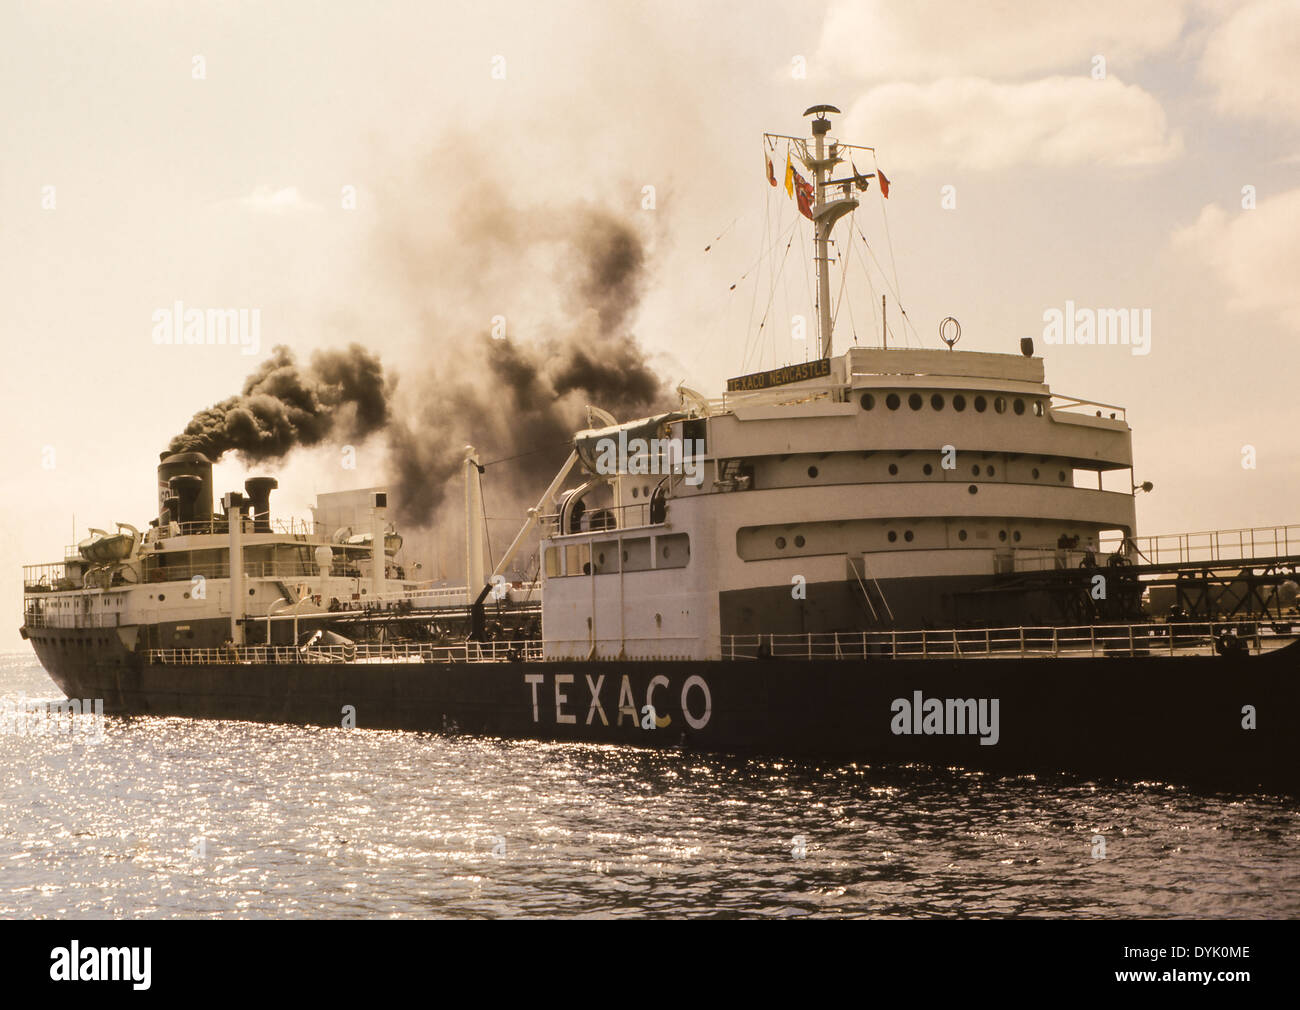 texaco ship smoke Stock Photo